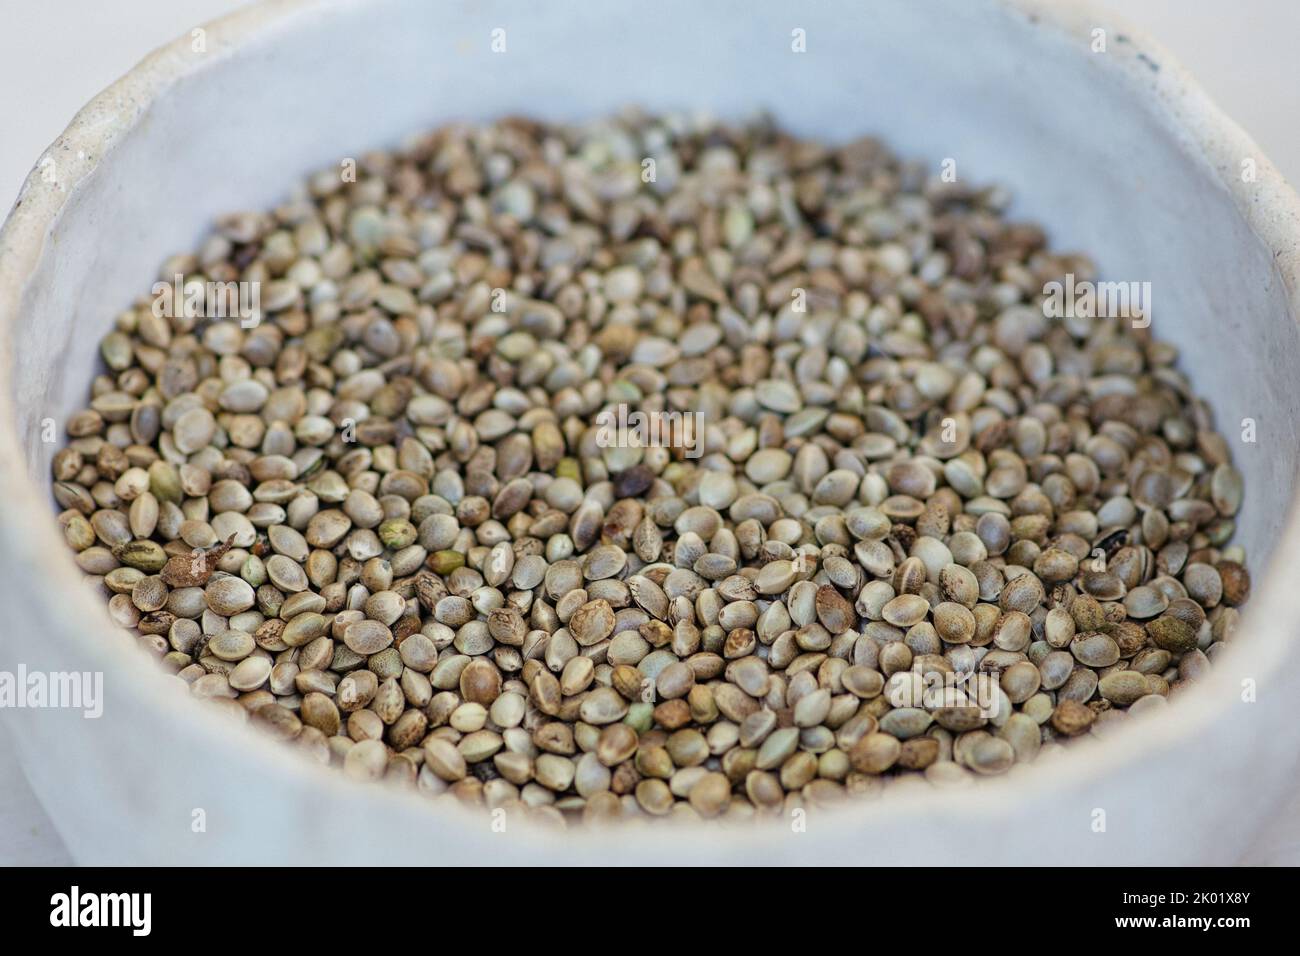 Dried hemp cannabis seeds in a white ceramic bowl, close up Stock Photo